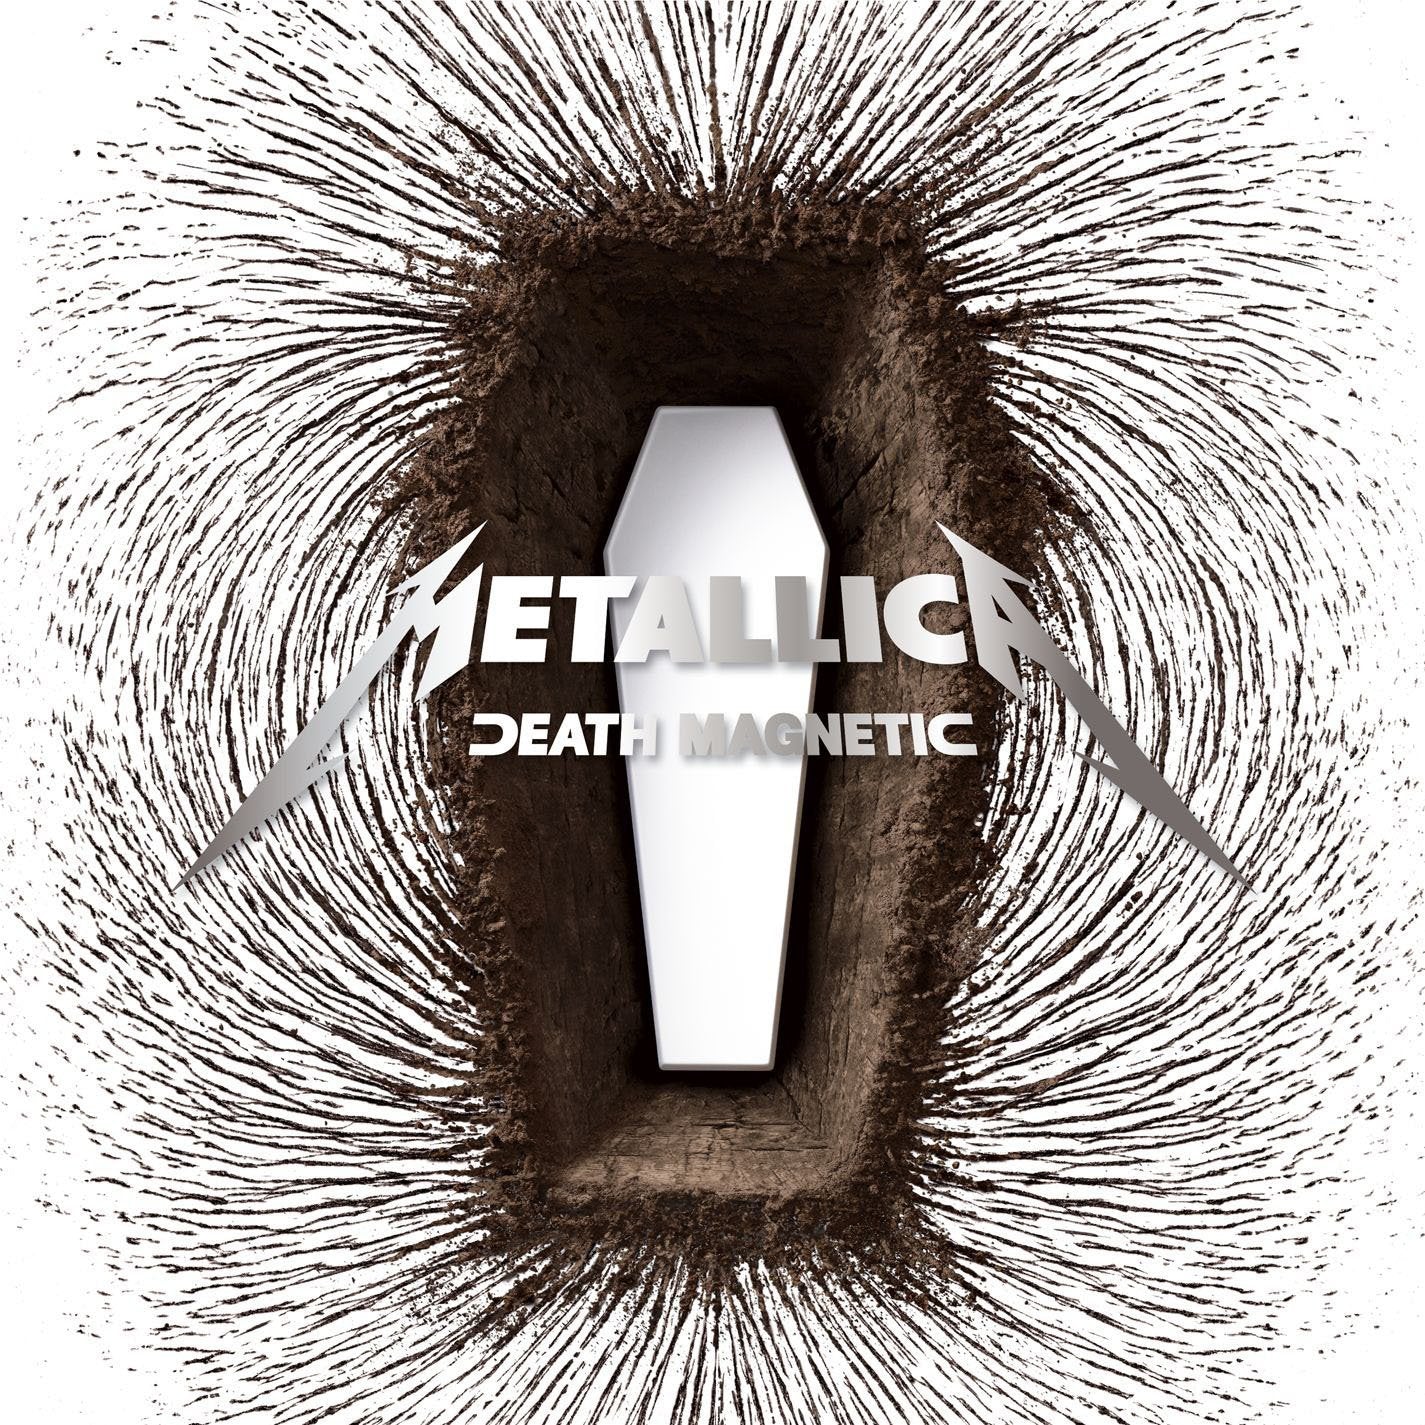 CD - Metallica - Death Magnetic